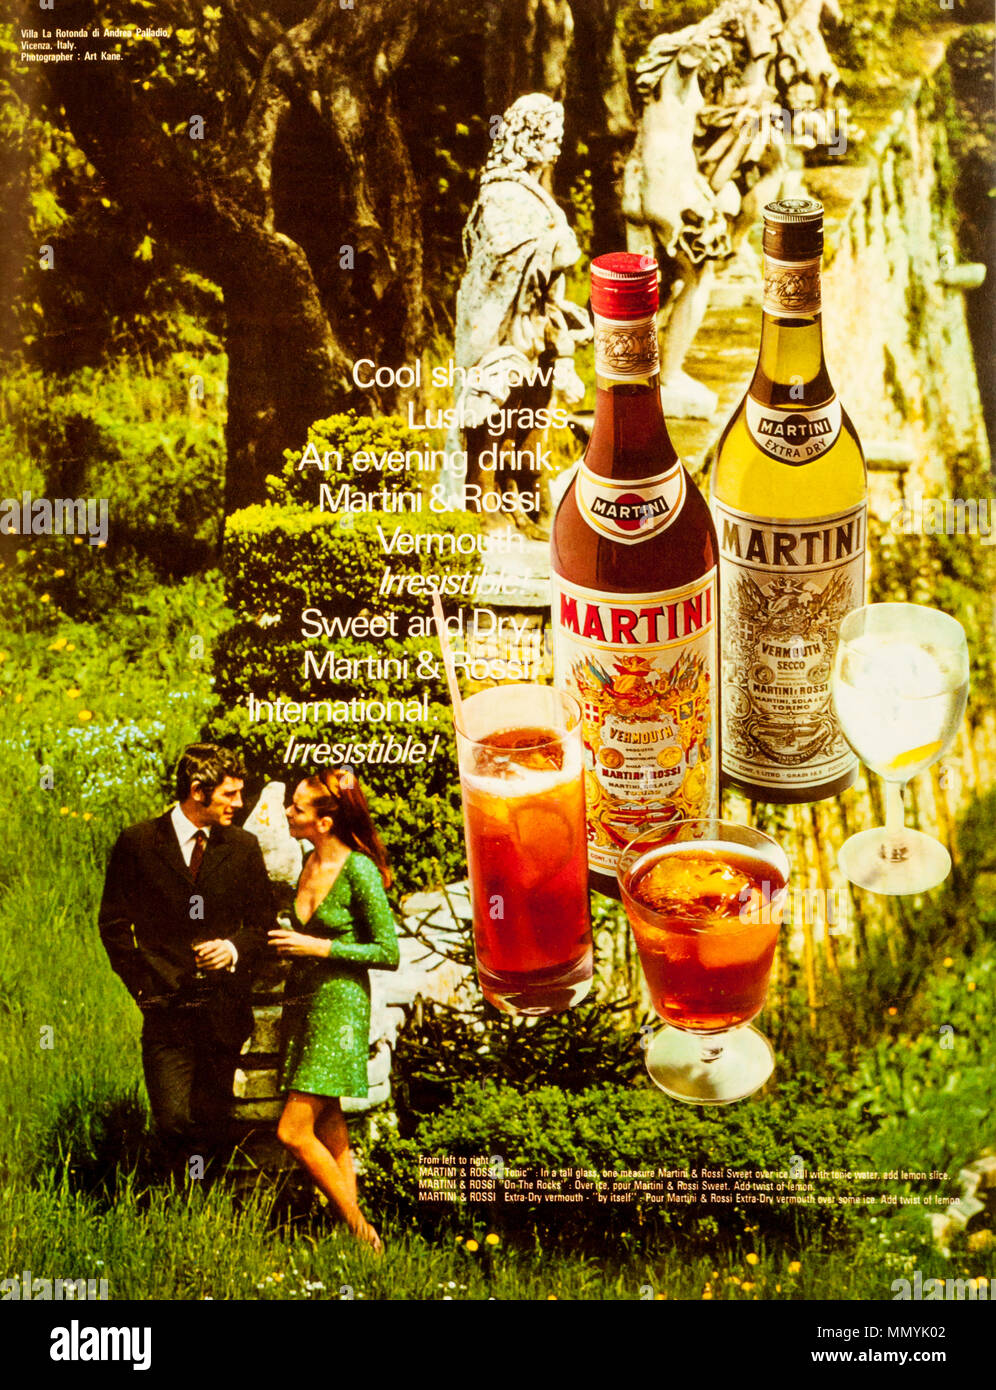 A 1970s magazine advertisement advertising Martini Vermouth. Stock Photo